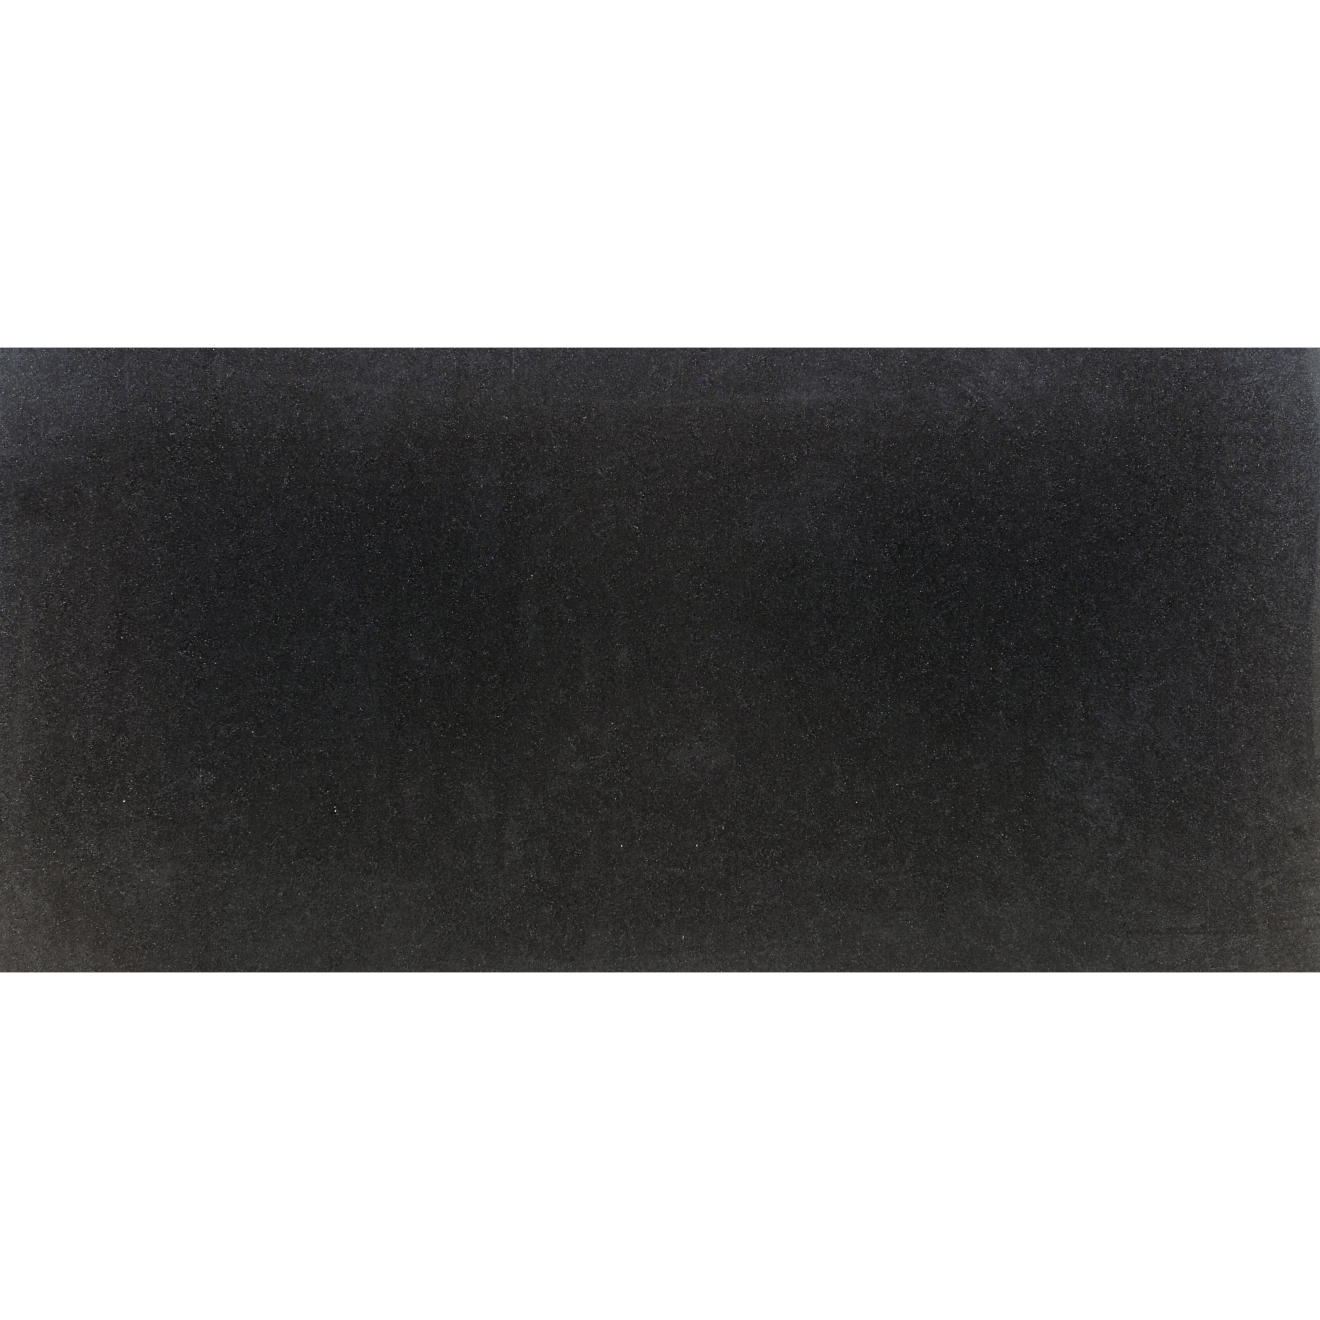 Absolute Black Granite Tile - Honed